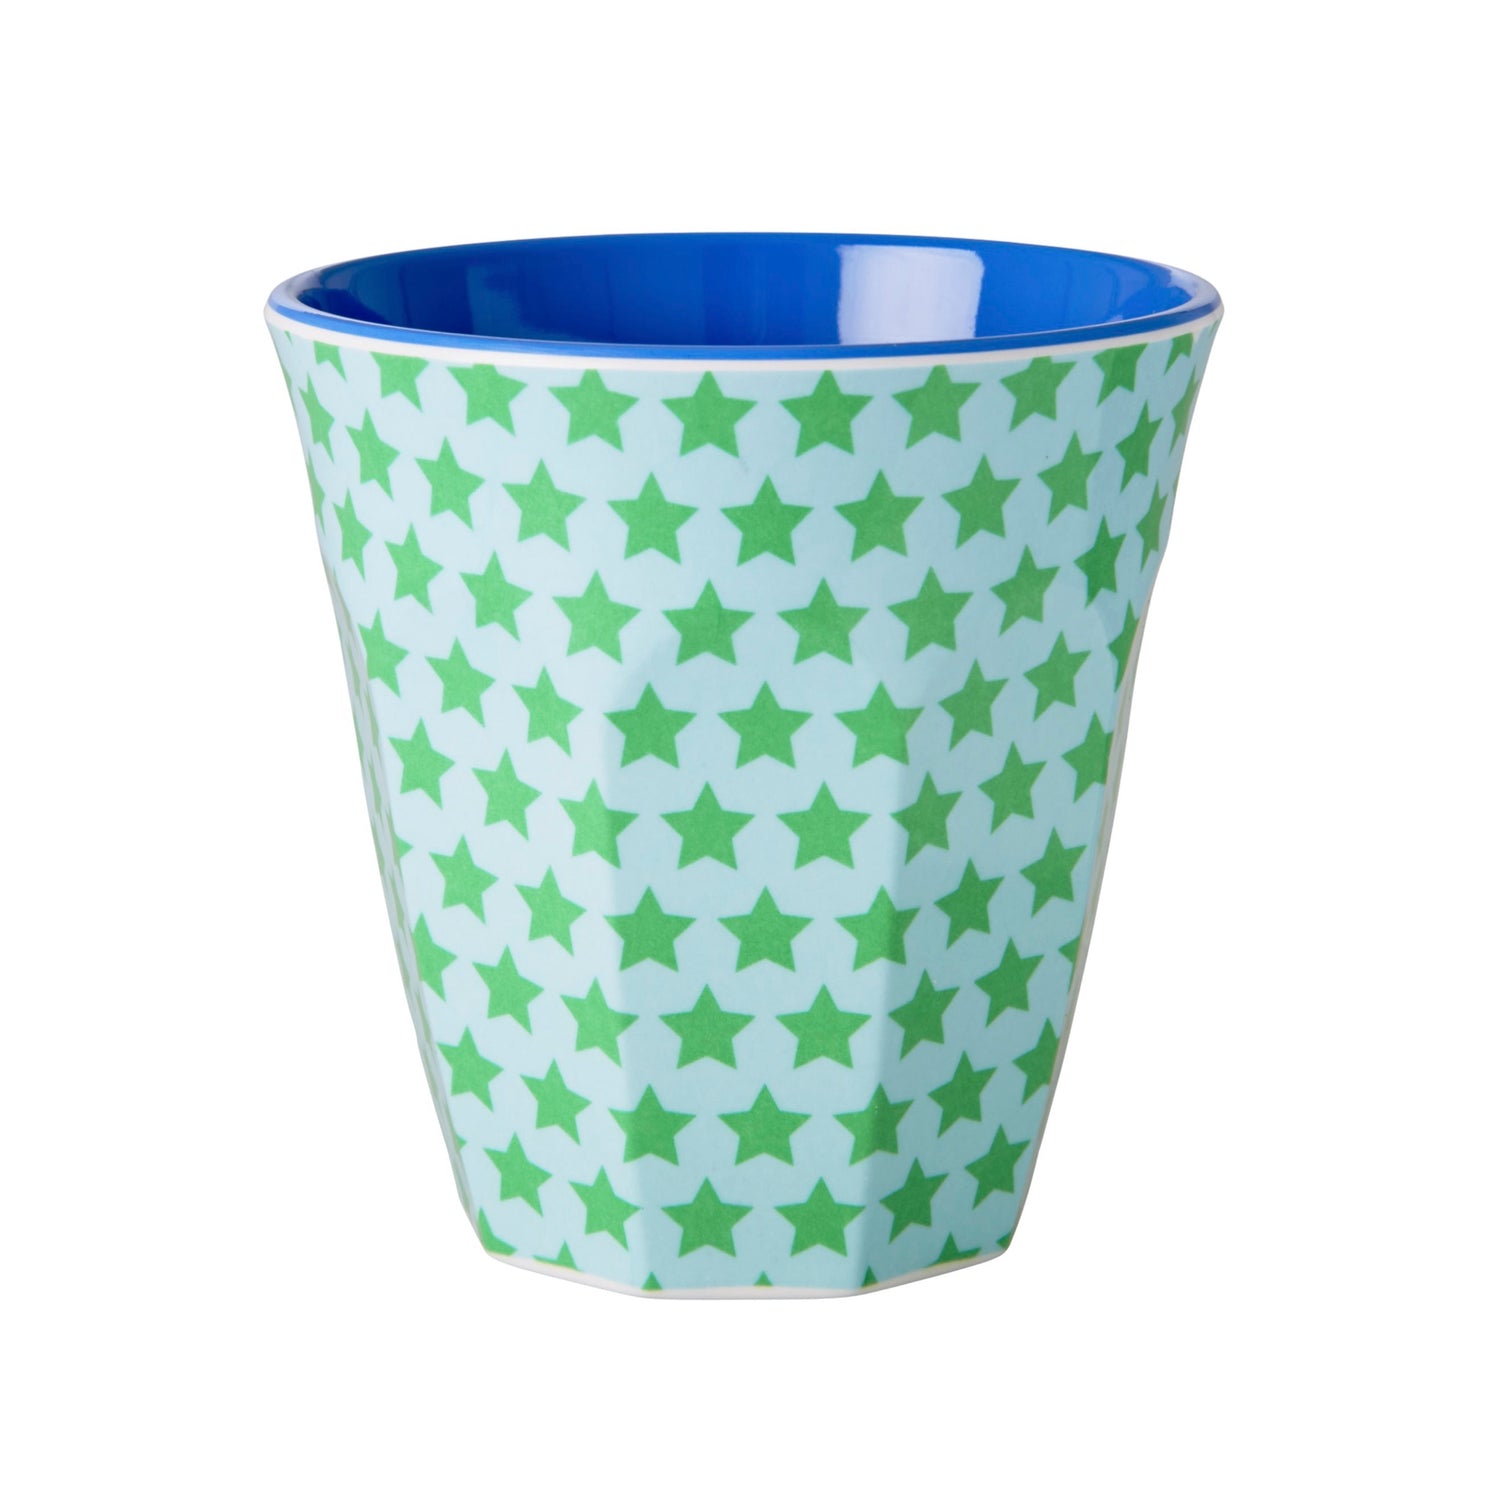 Vaso de melamina - estrellas verdes con interior azul